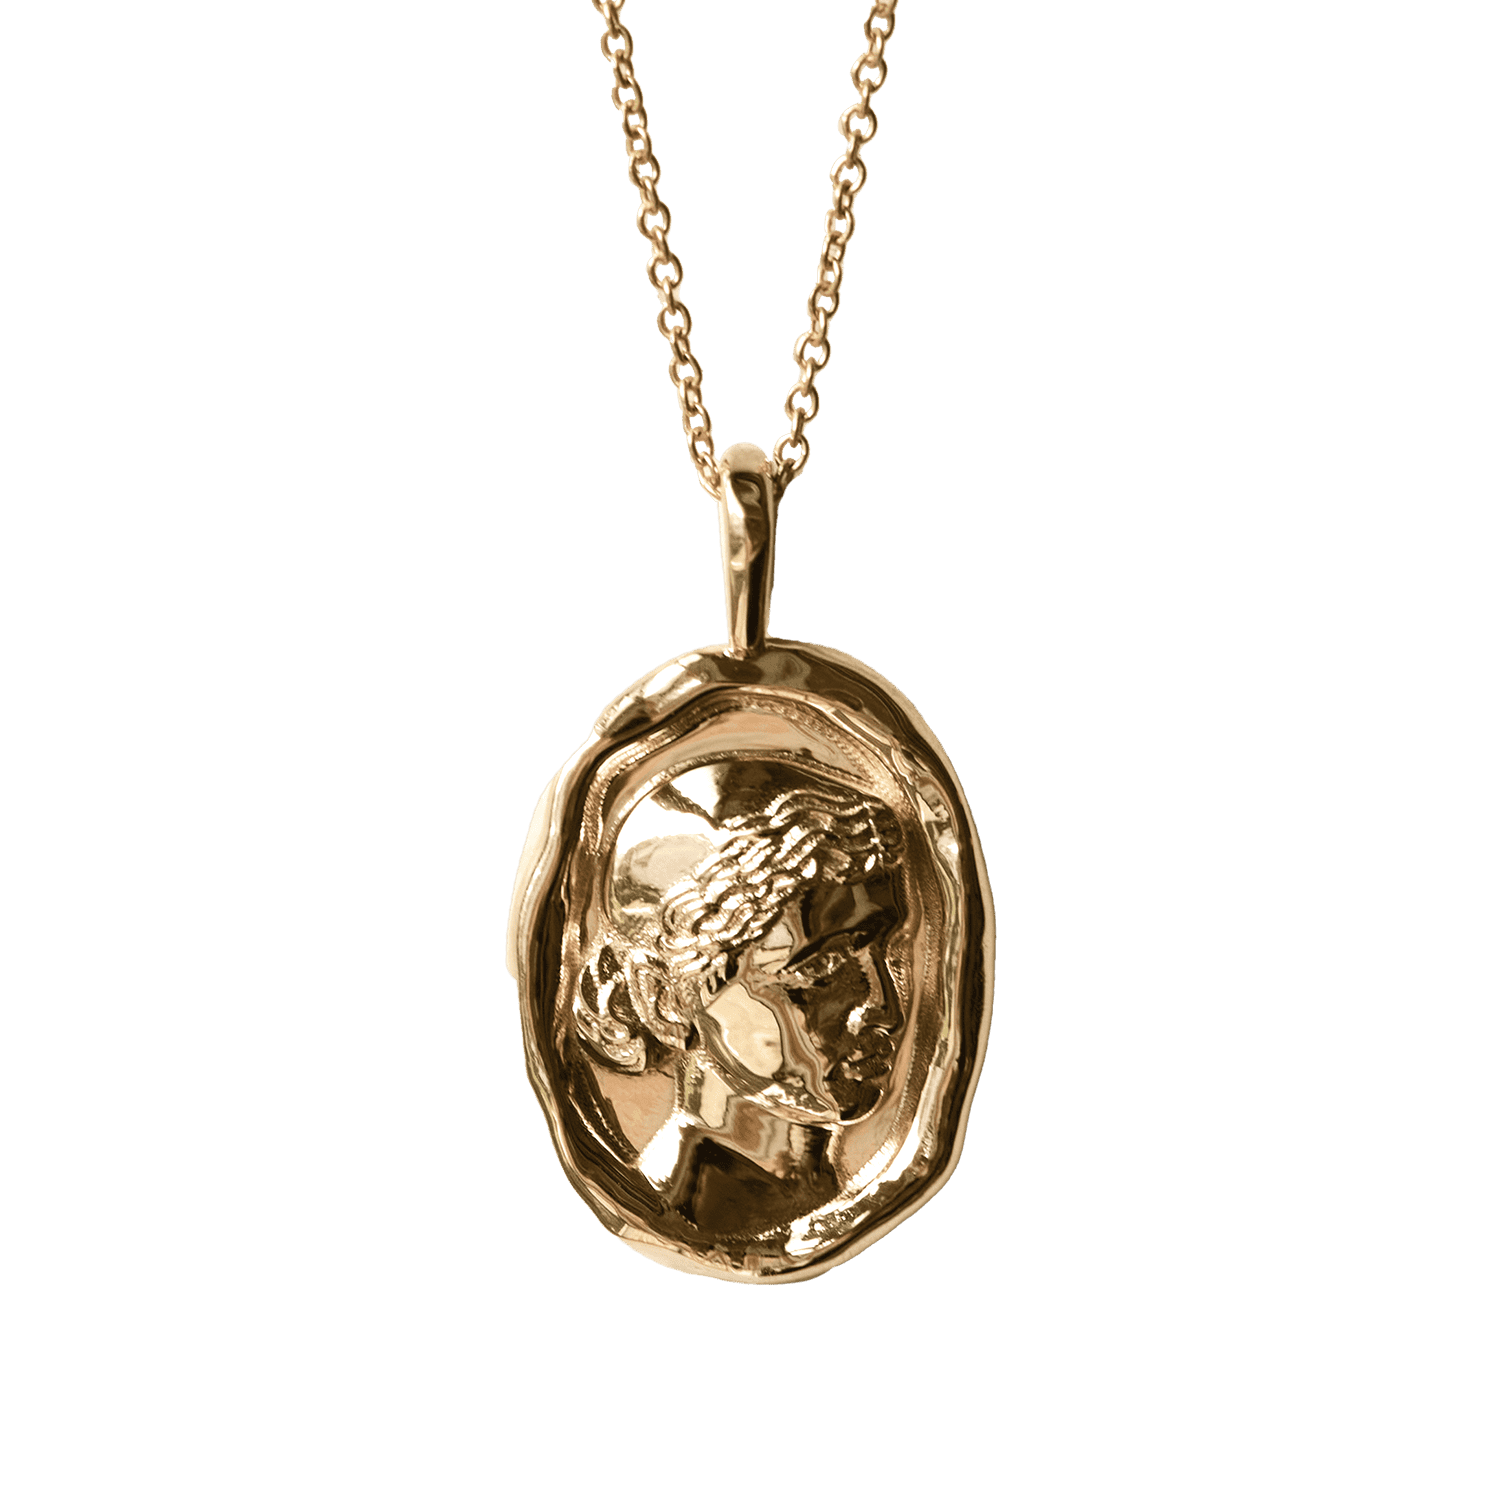 Cleopatra Necklace - Molten Gold Pendant - Difficult Women